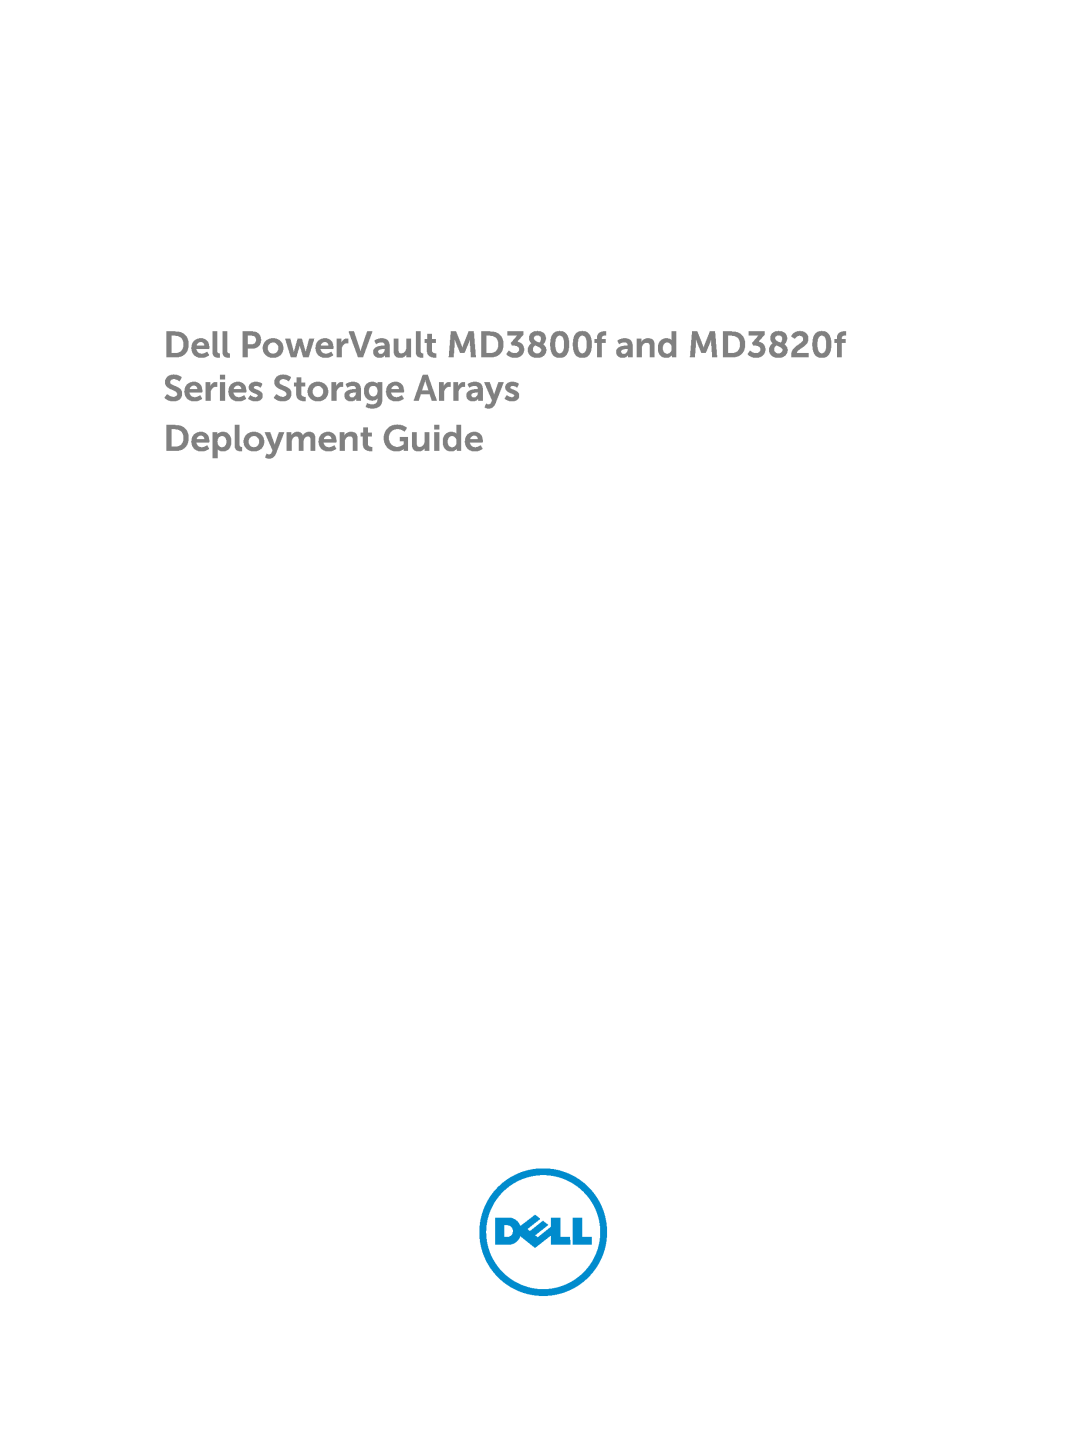 Dell MD3800f manual Getting Started Guide, Regulatory Model E03J and E04J Series, Regulatory Type E03J001 and E04J001 